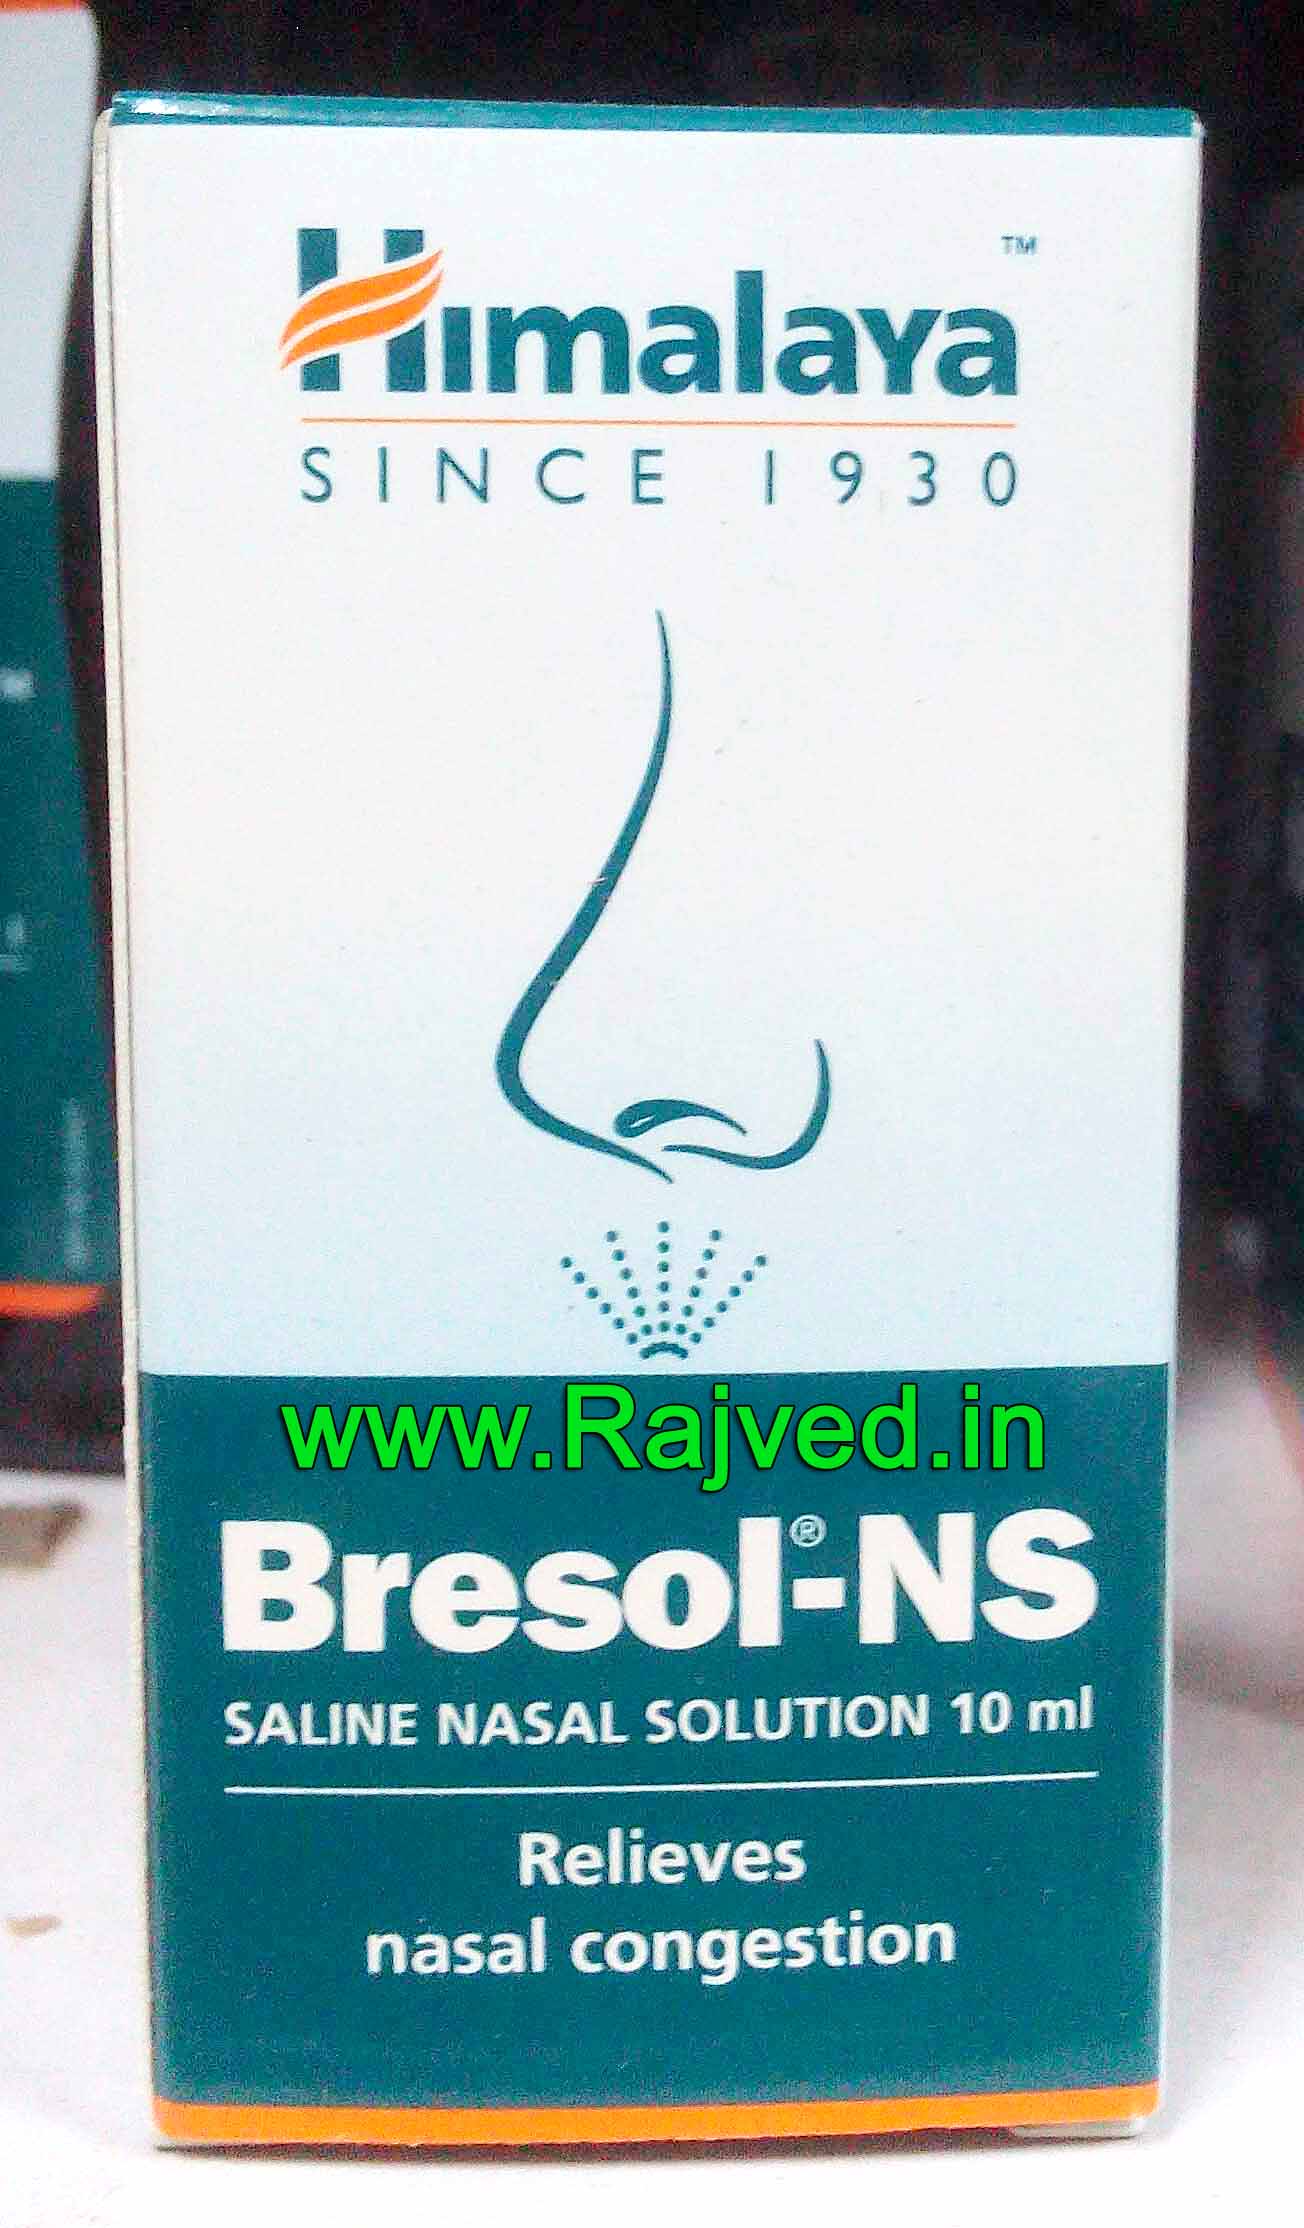 bresol-NS solution 10 ml The Himalaya Drug Company